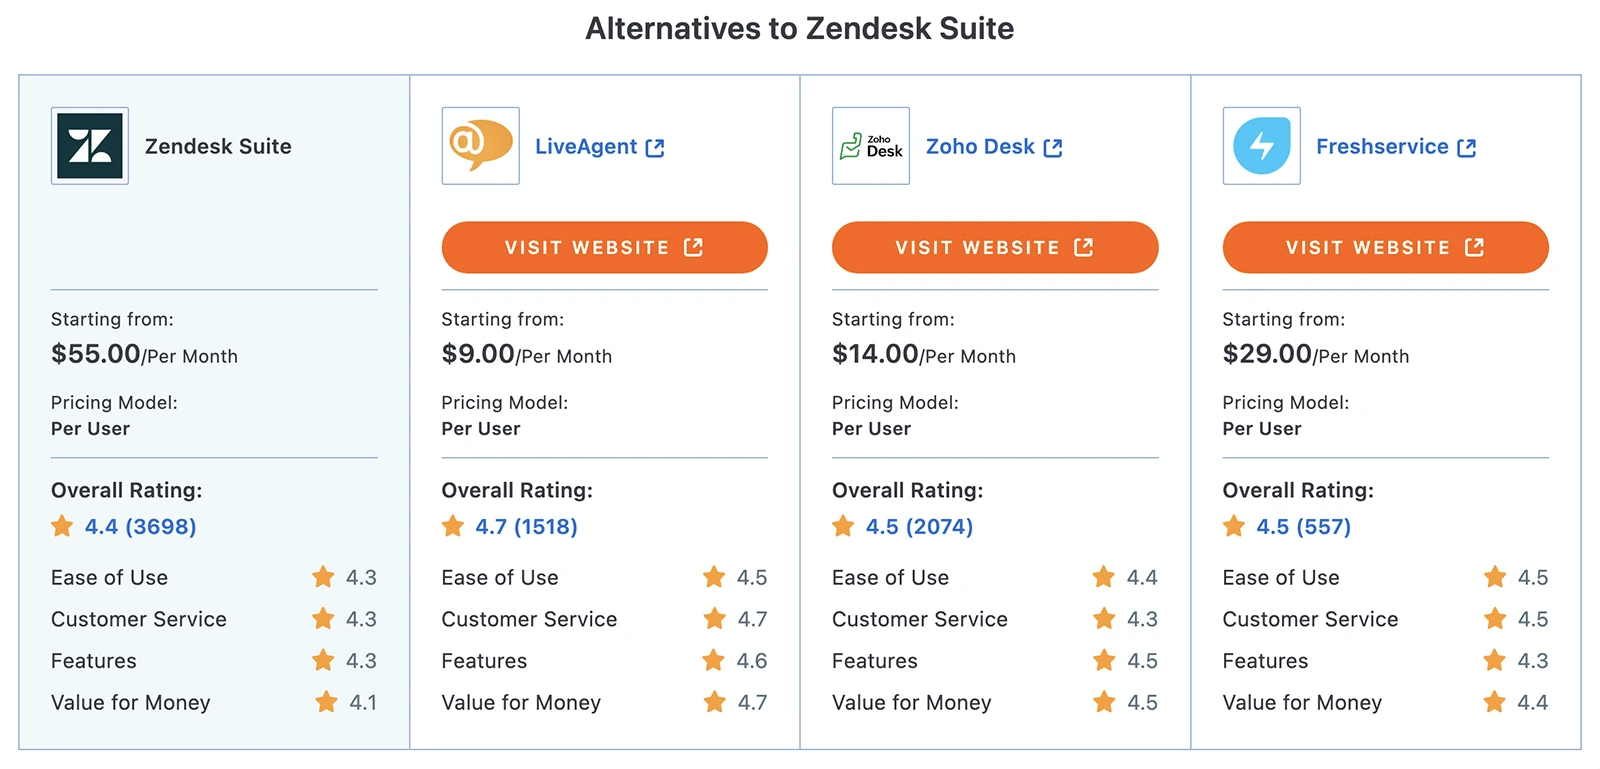 Alternatives to Zendesk Suite Image